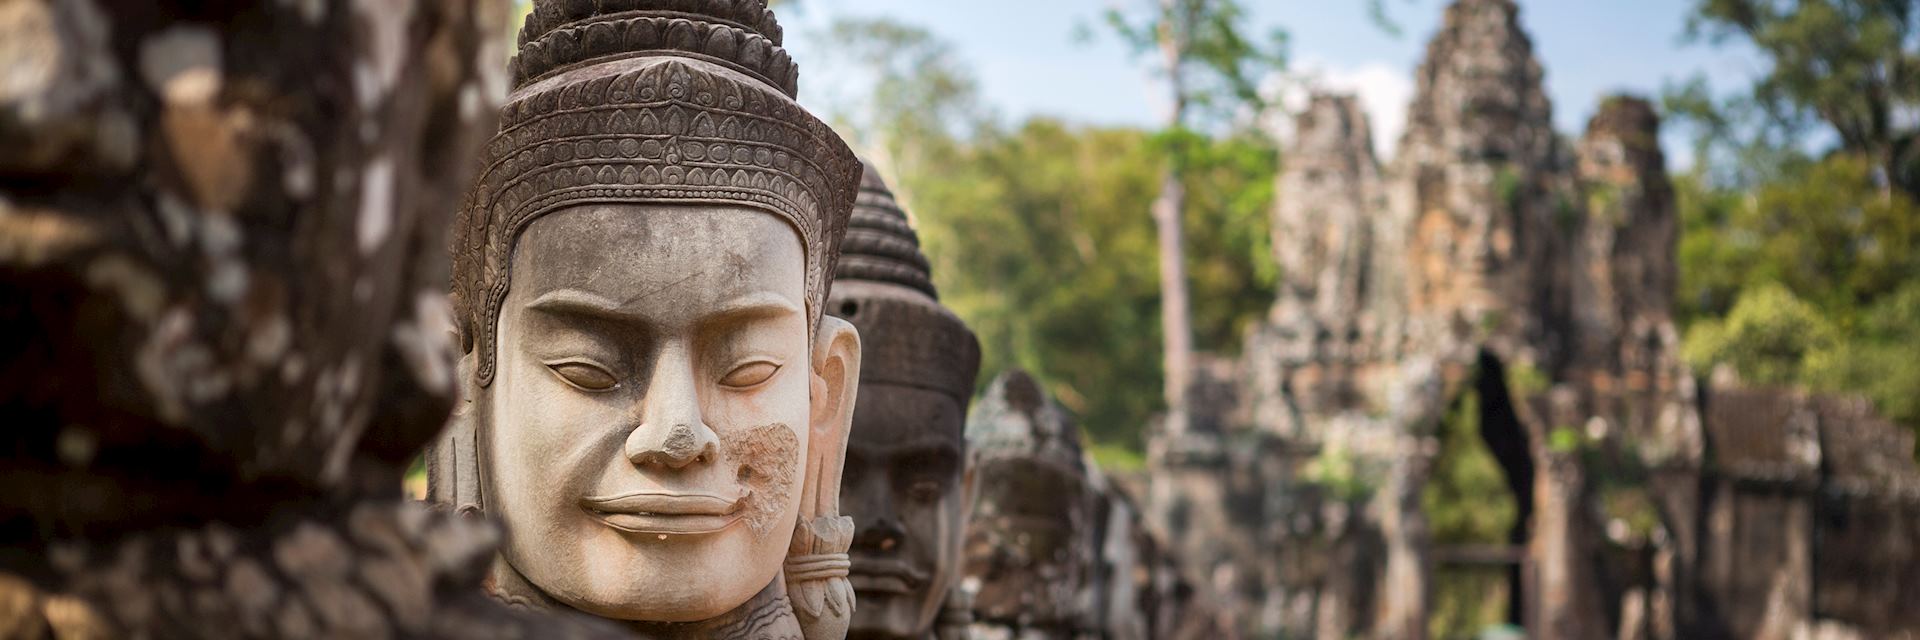 Buddhist head statue, Angkor Wat